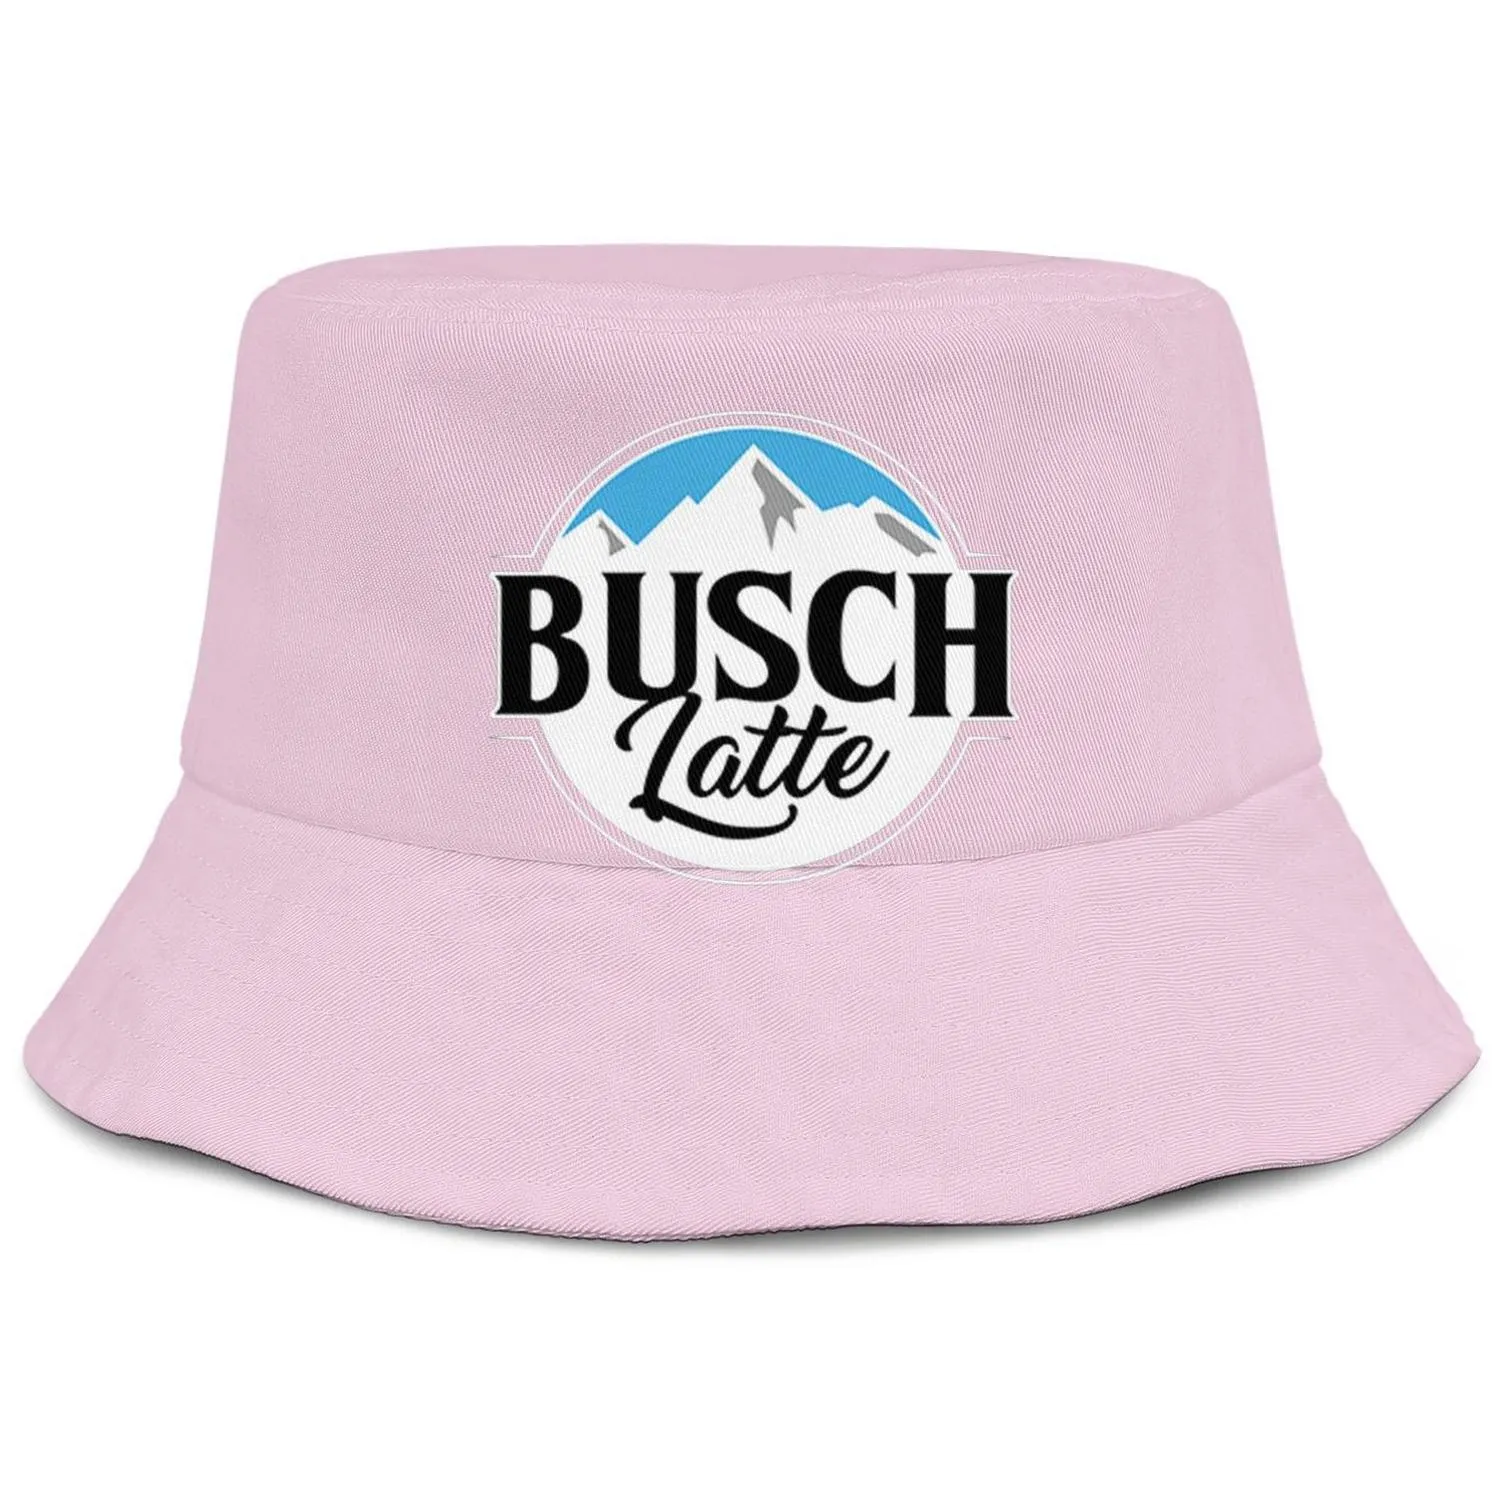 Busch Light Beer Logo Mens and Womens Buckethat Cool Youth Hink Baseballcap Light Blue Adge White Latte Så mycket5883229